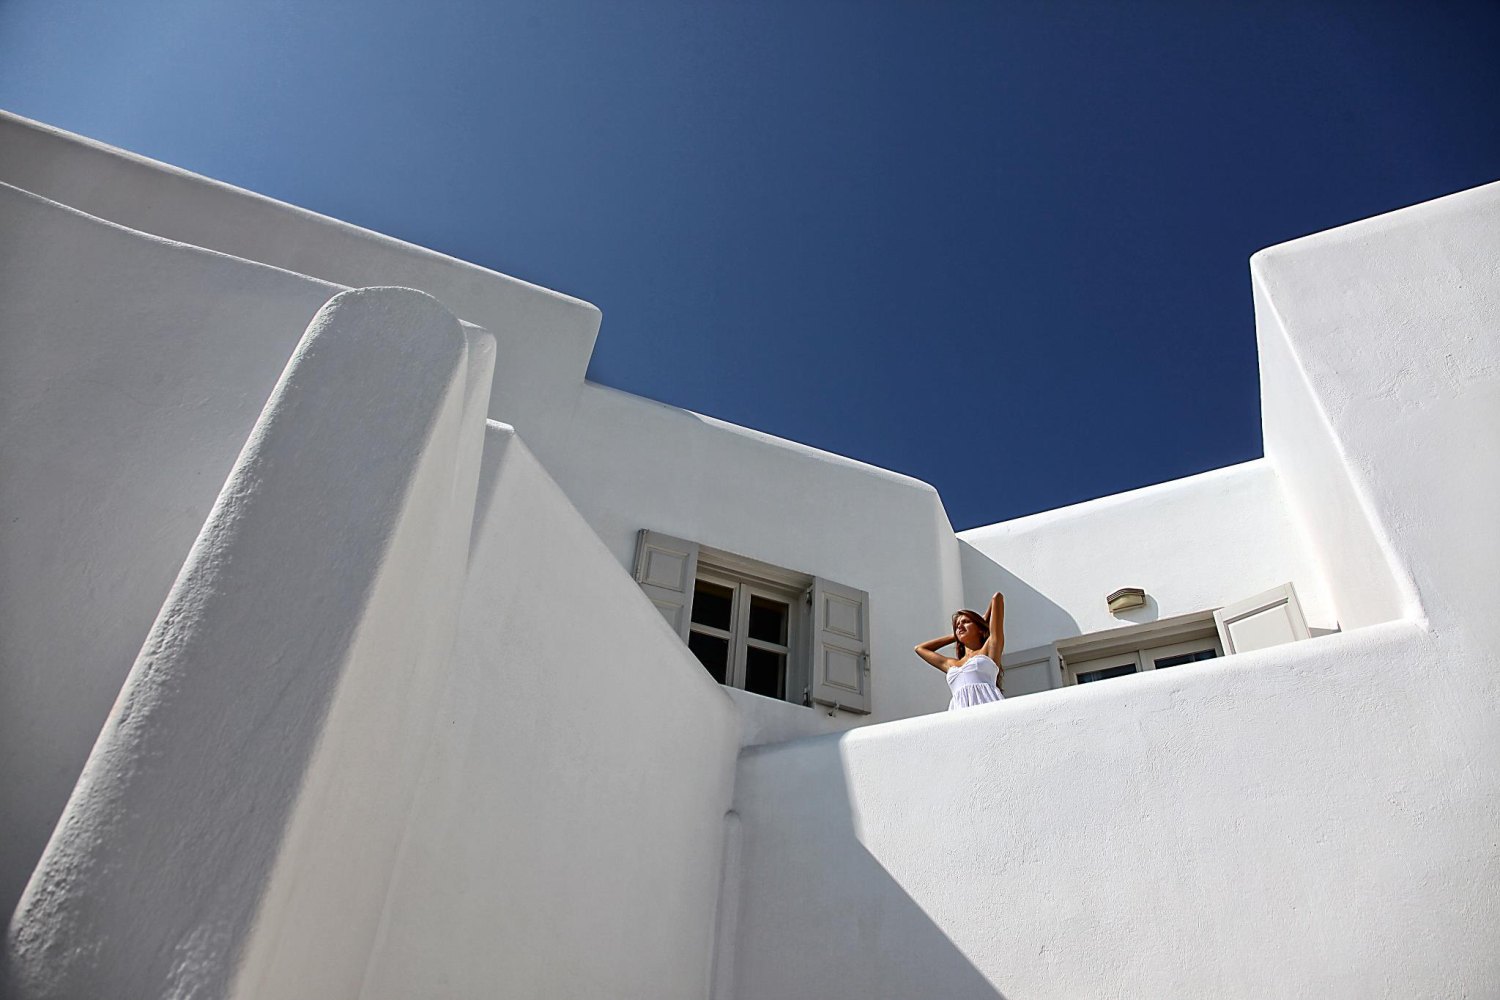 Palladium Hotel Mykonos, Cycladic Islands - Greece